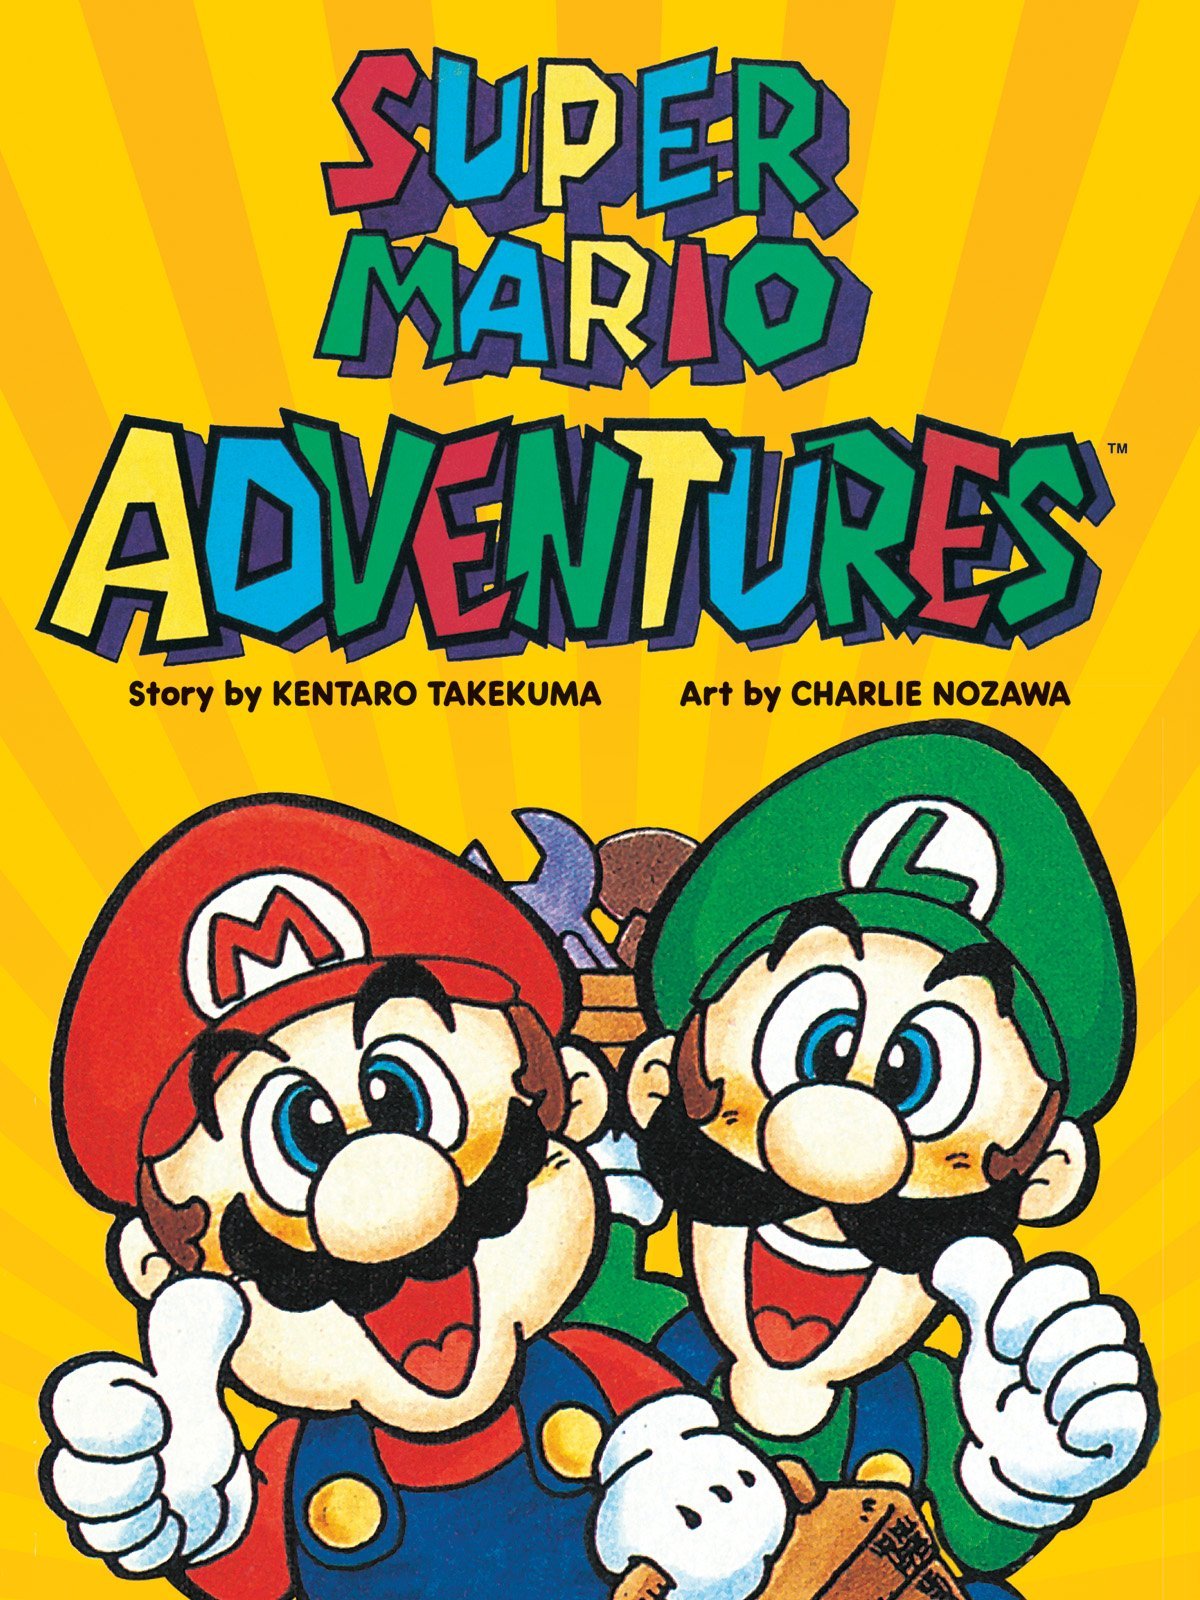 Super Mario Odyssey - Super Mario Wiki, the Mario encyclopedia